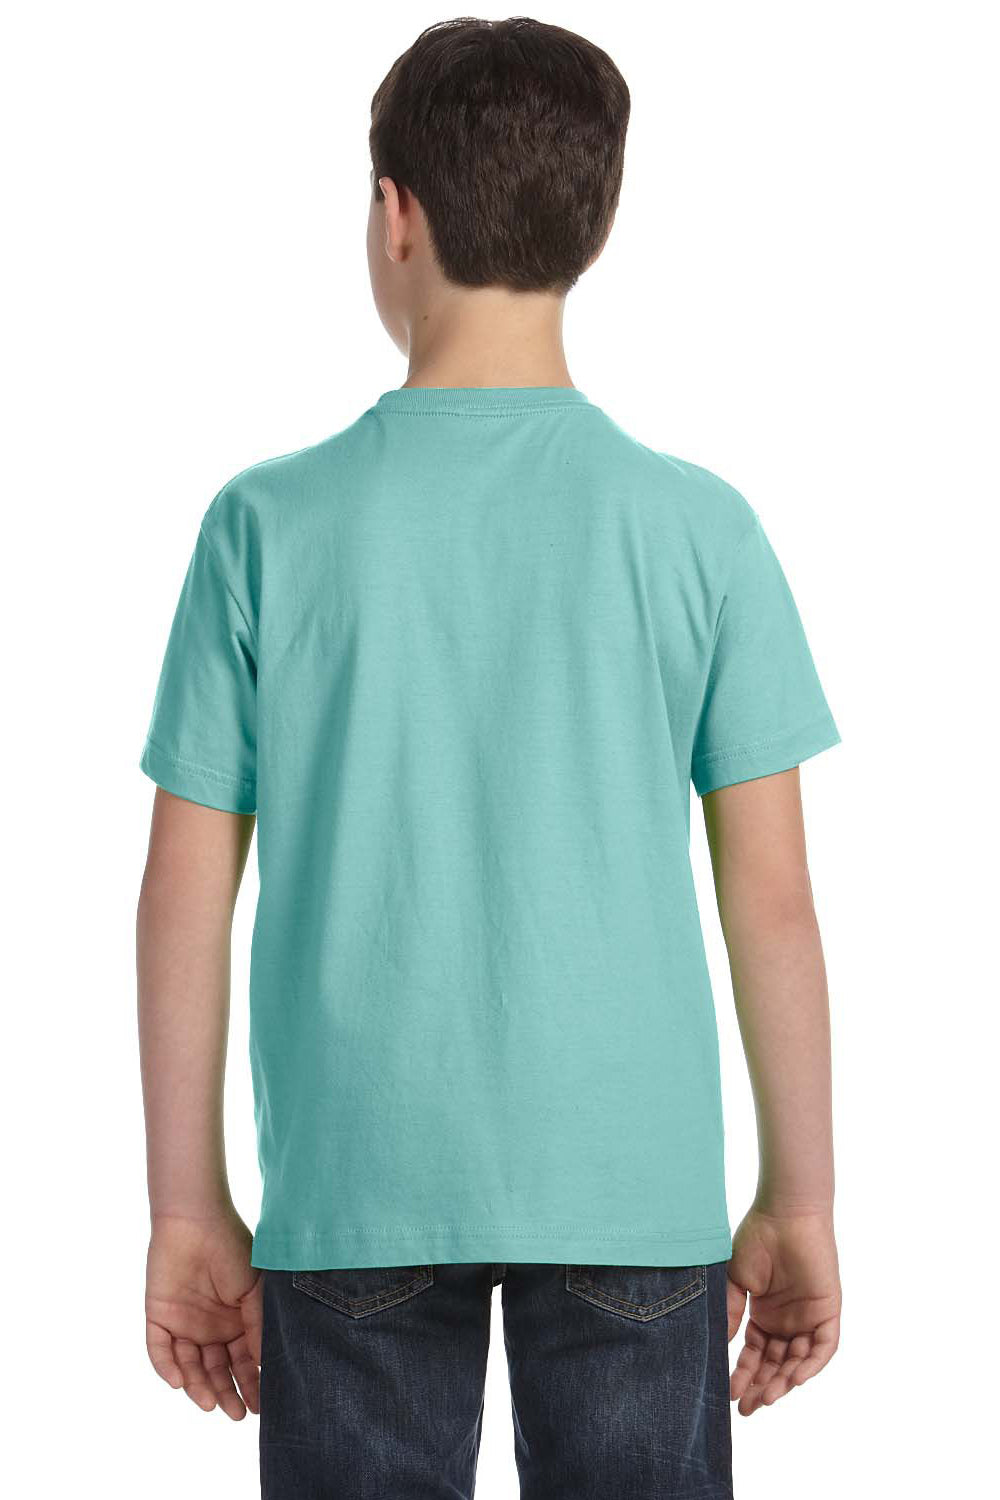 LAT 6101 Youth Fine Jersey Short Sleeve Crewneck T-Shirt Chill Blue Back